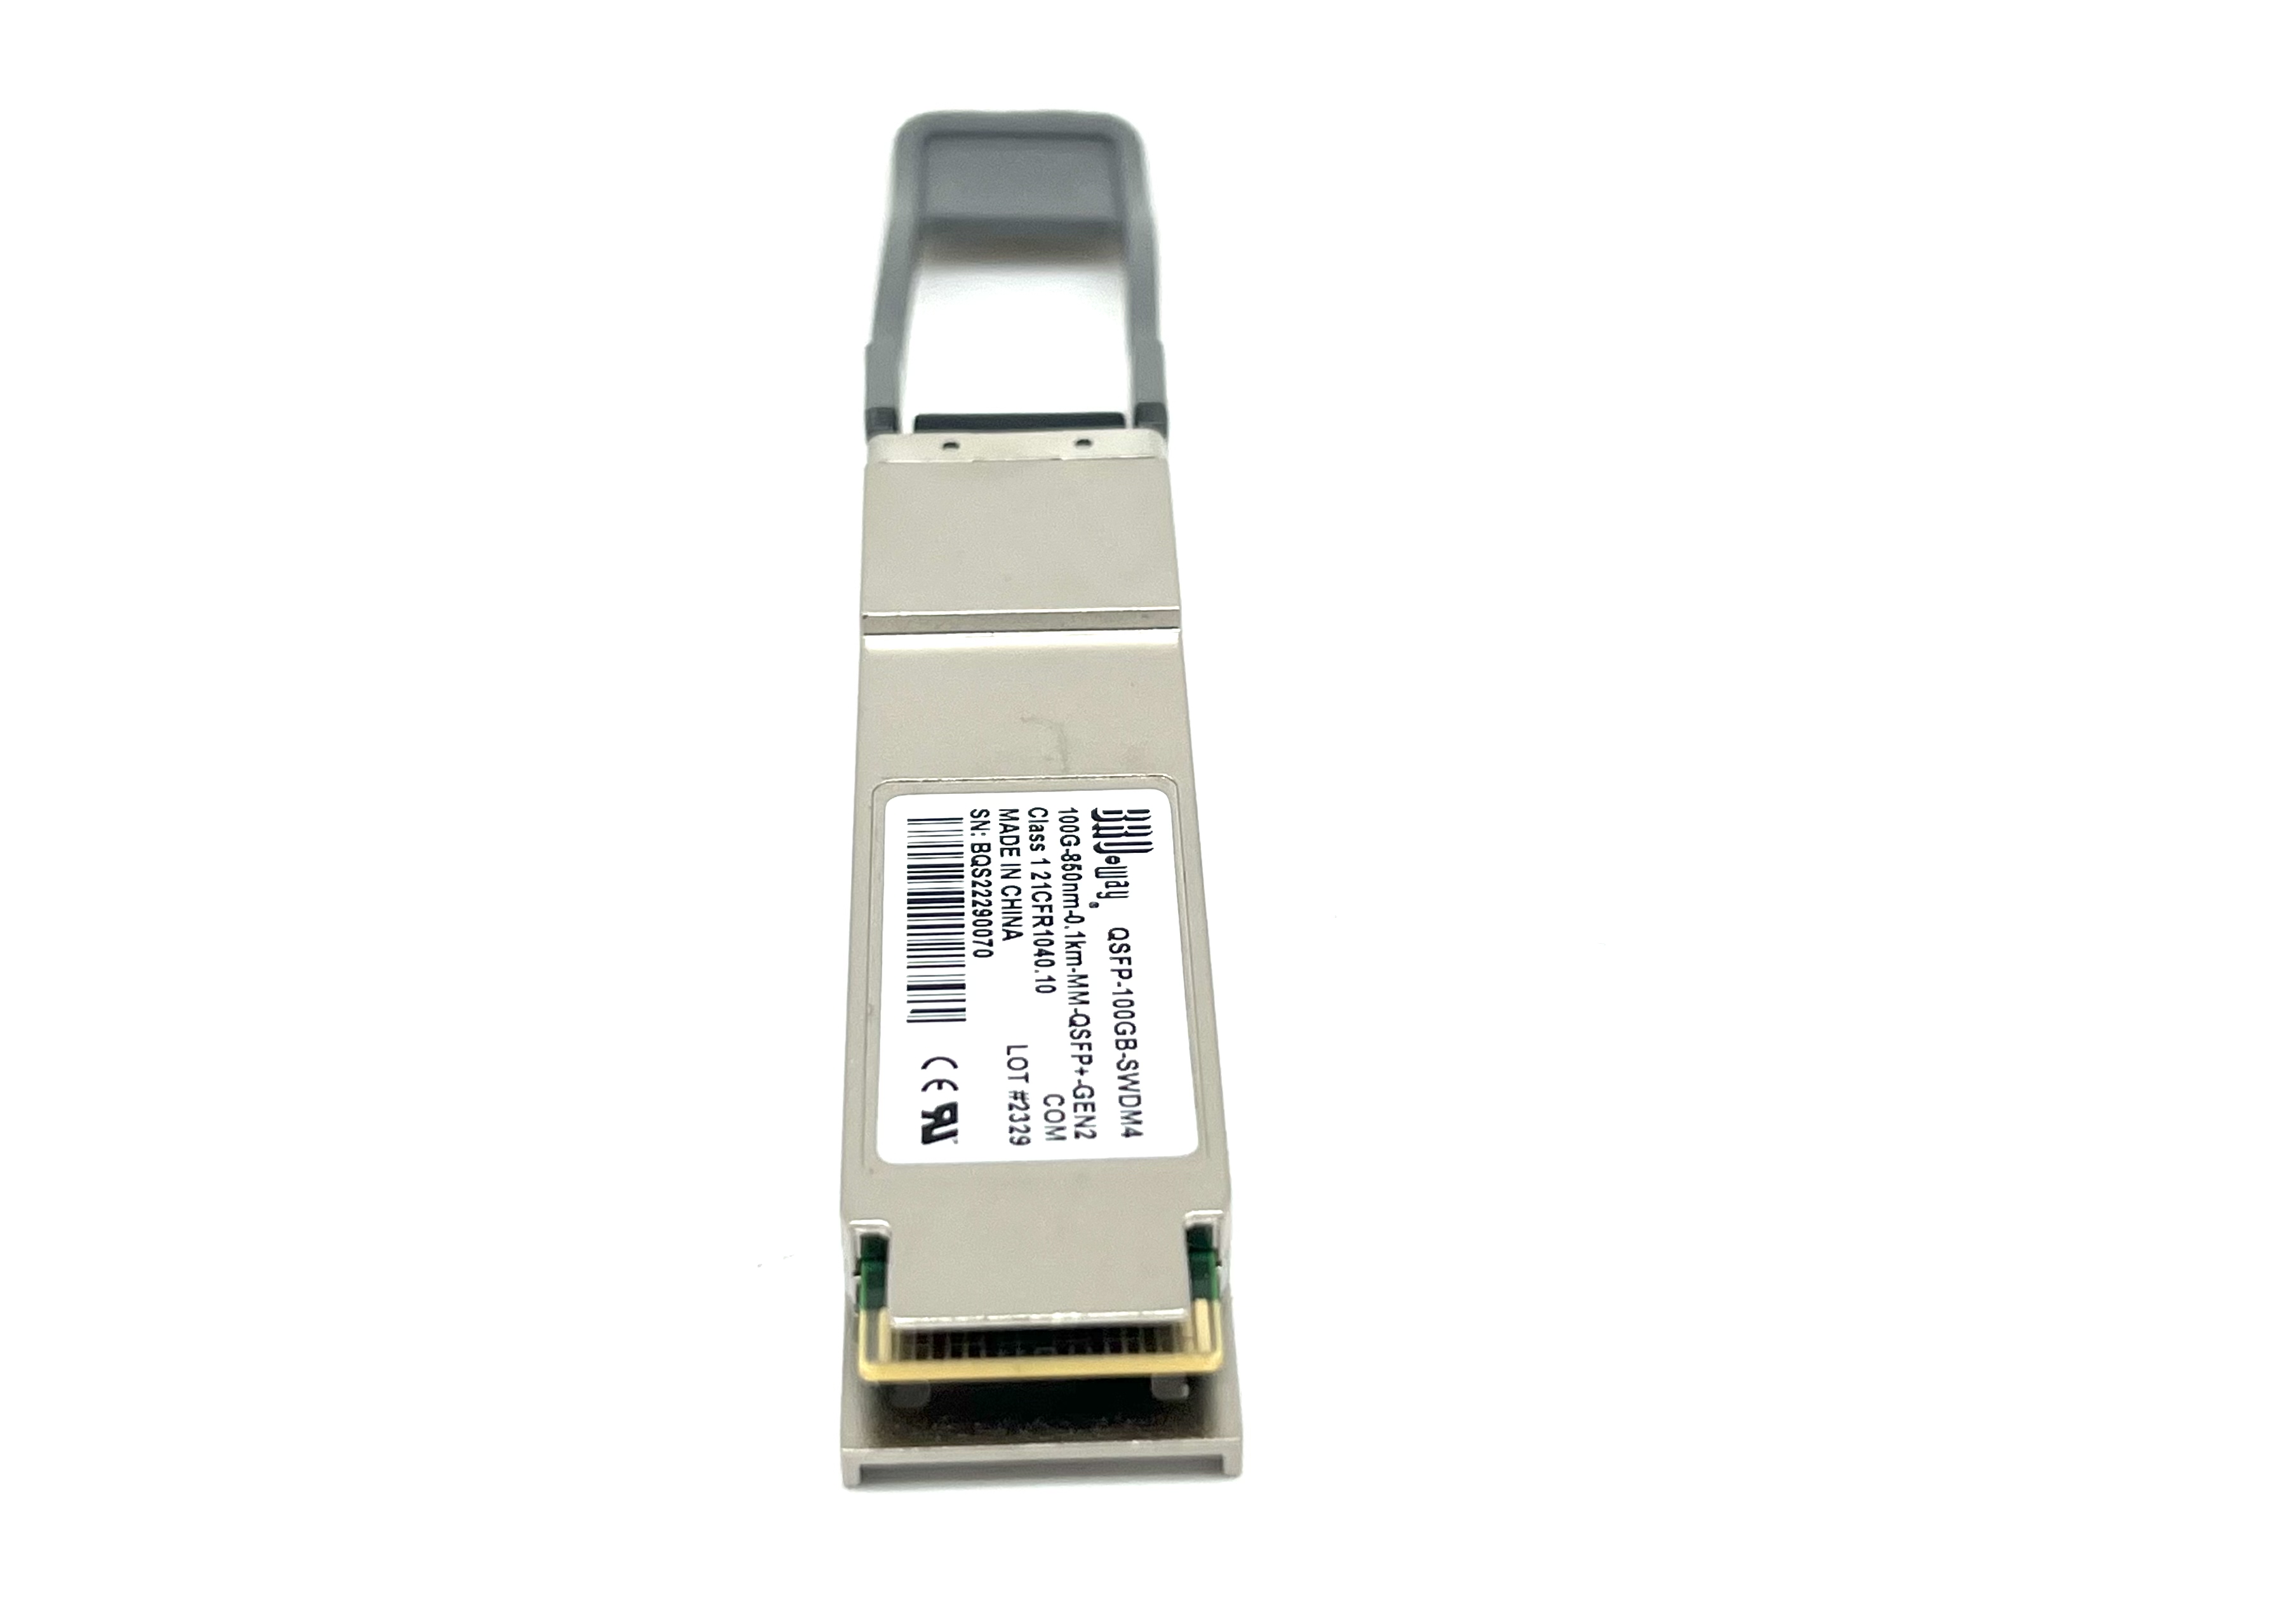 QSFP-100GB-SWDM4-2